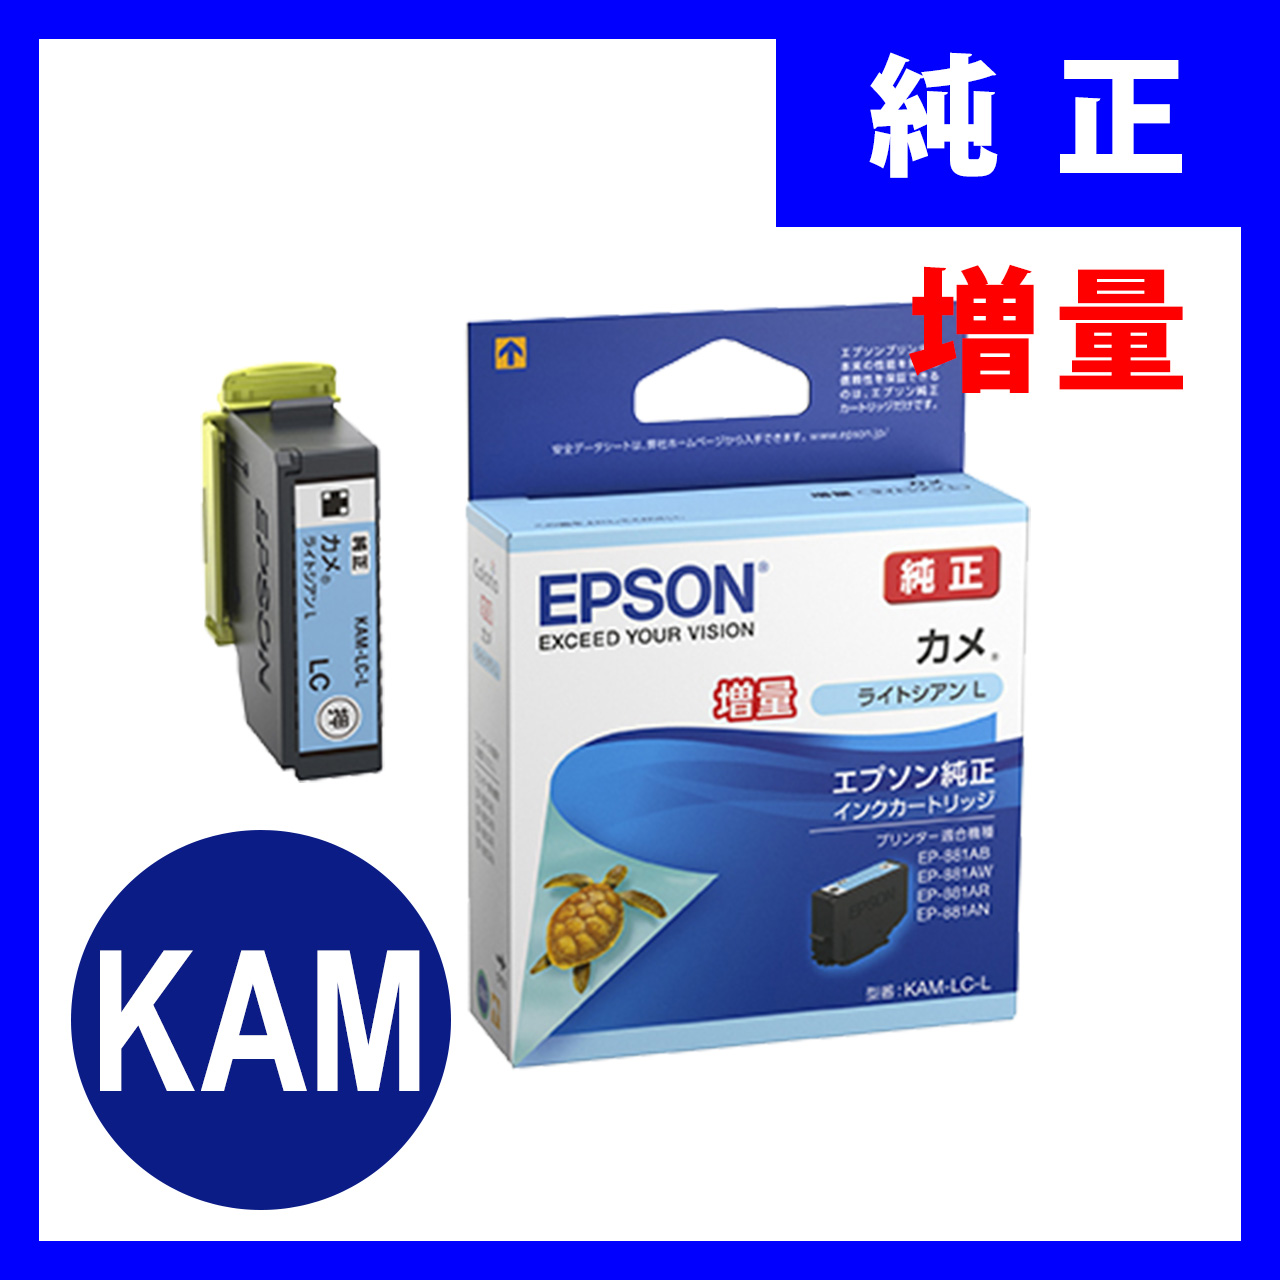 EPSON KAM-LC 新品未使用